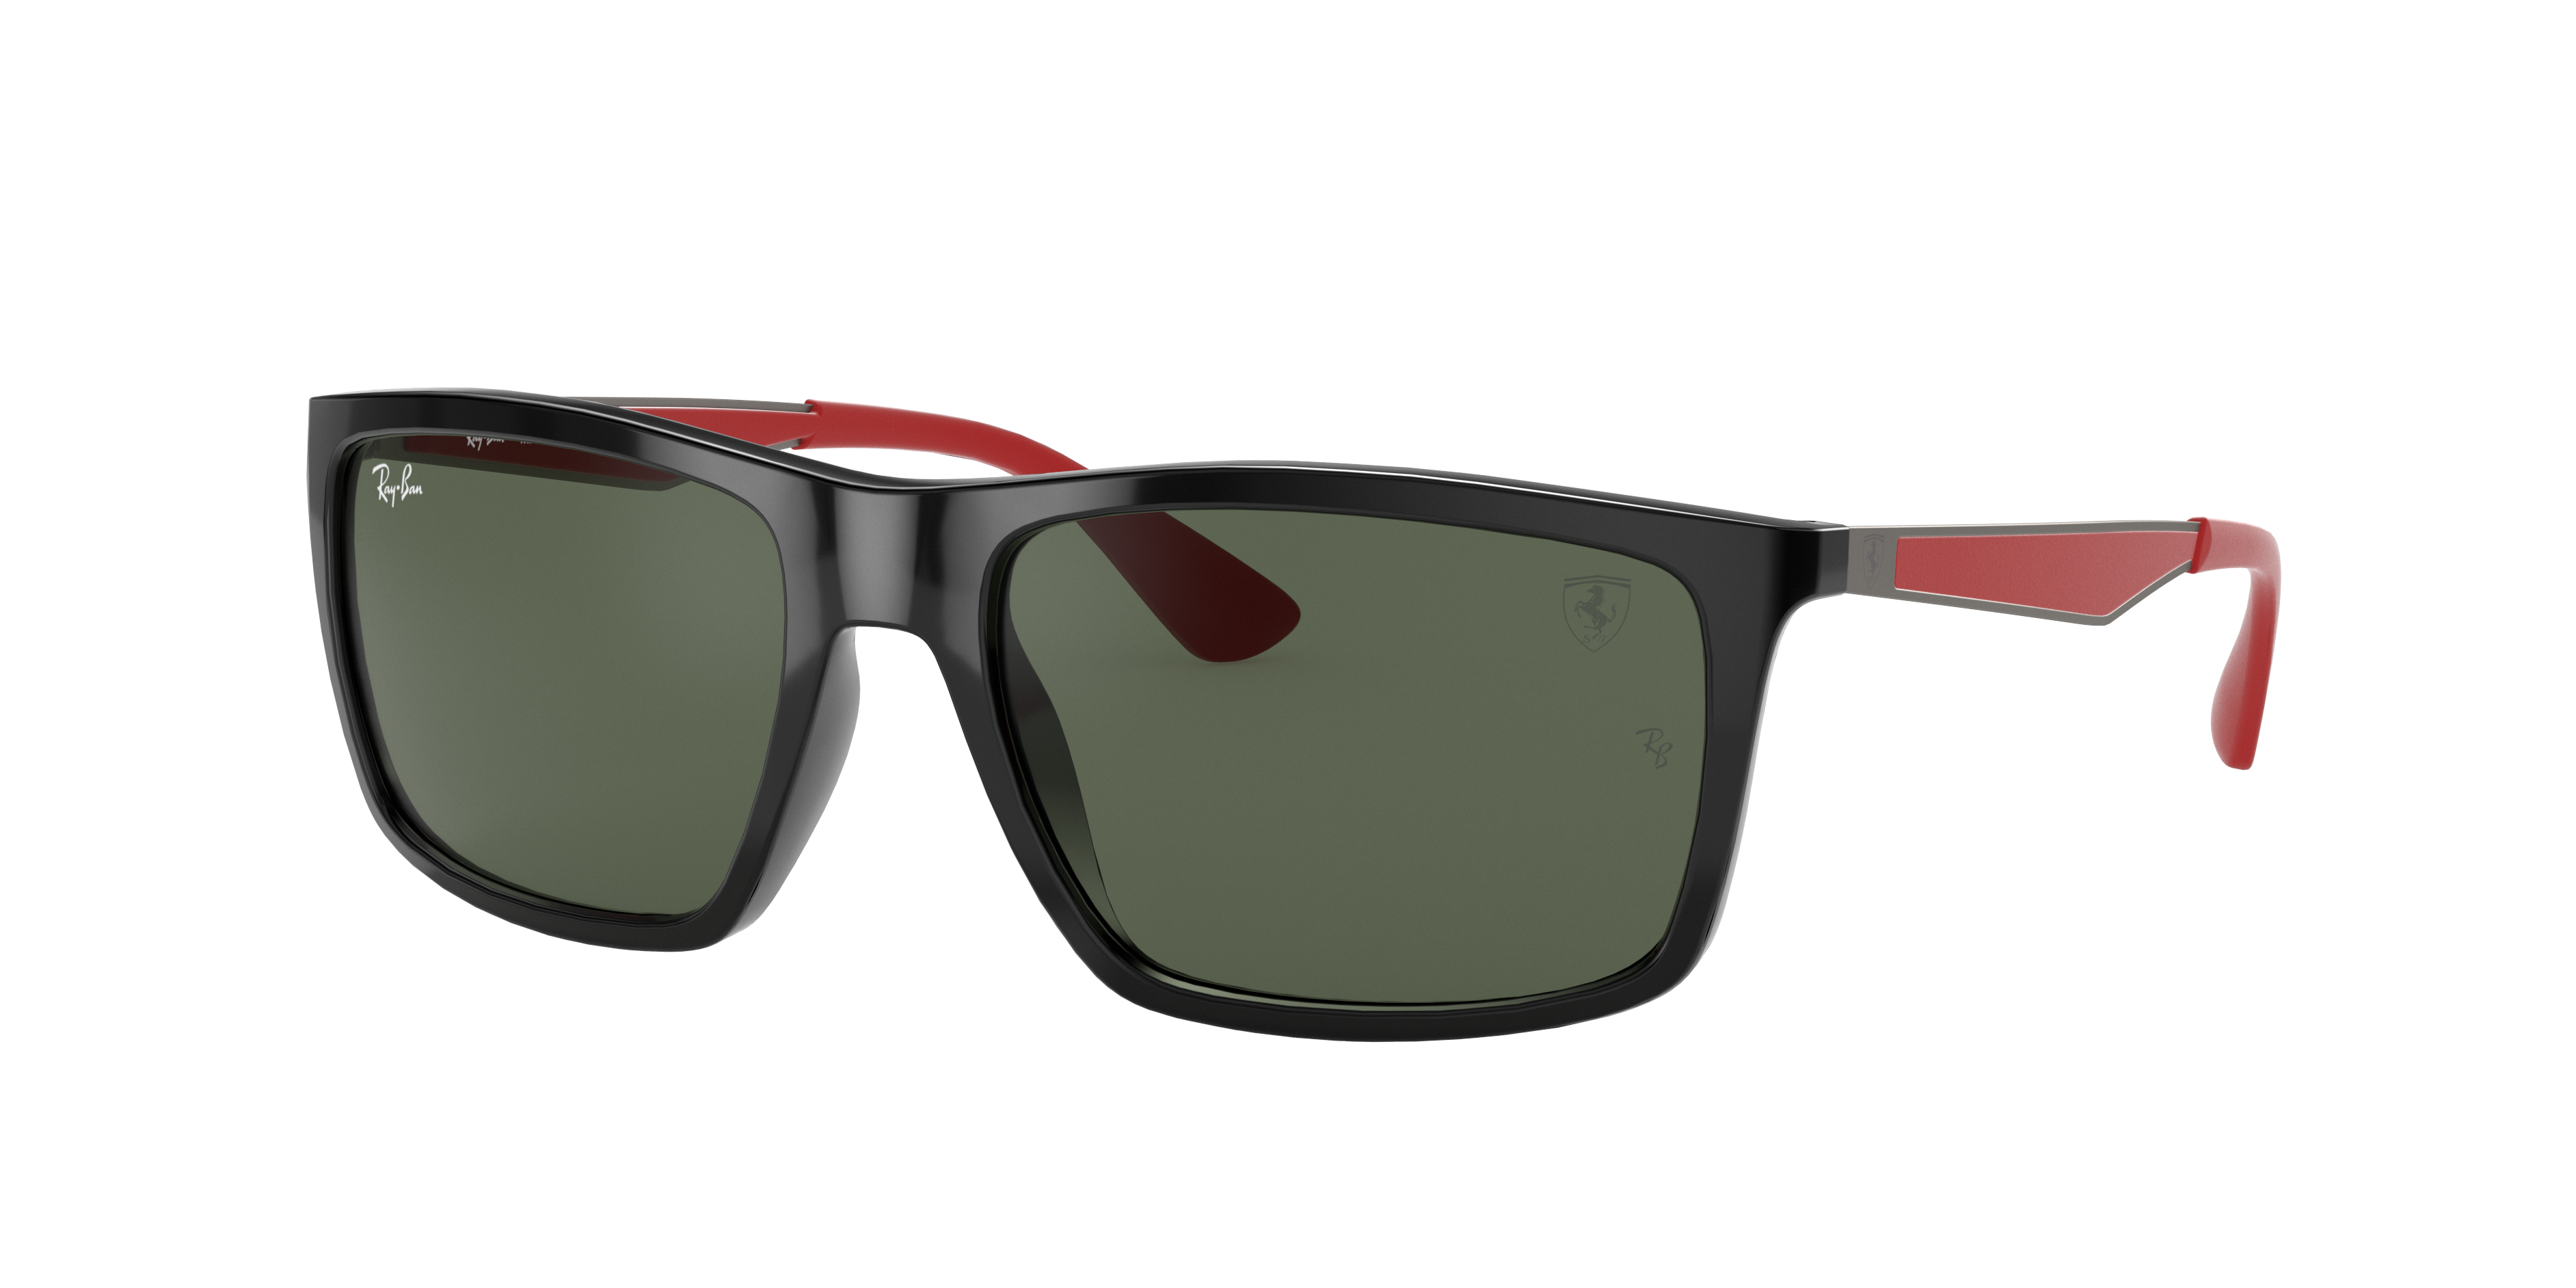 Rb4228m Scuderia Ferrari Collection Sunglasses in Black and Green | Ray-Ban®